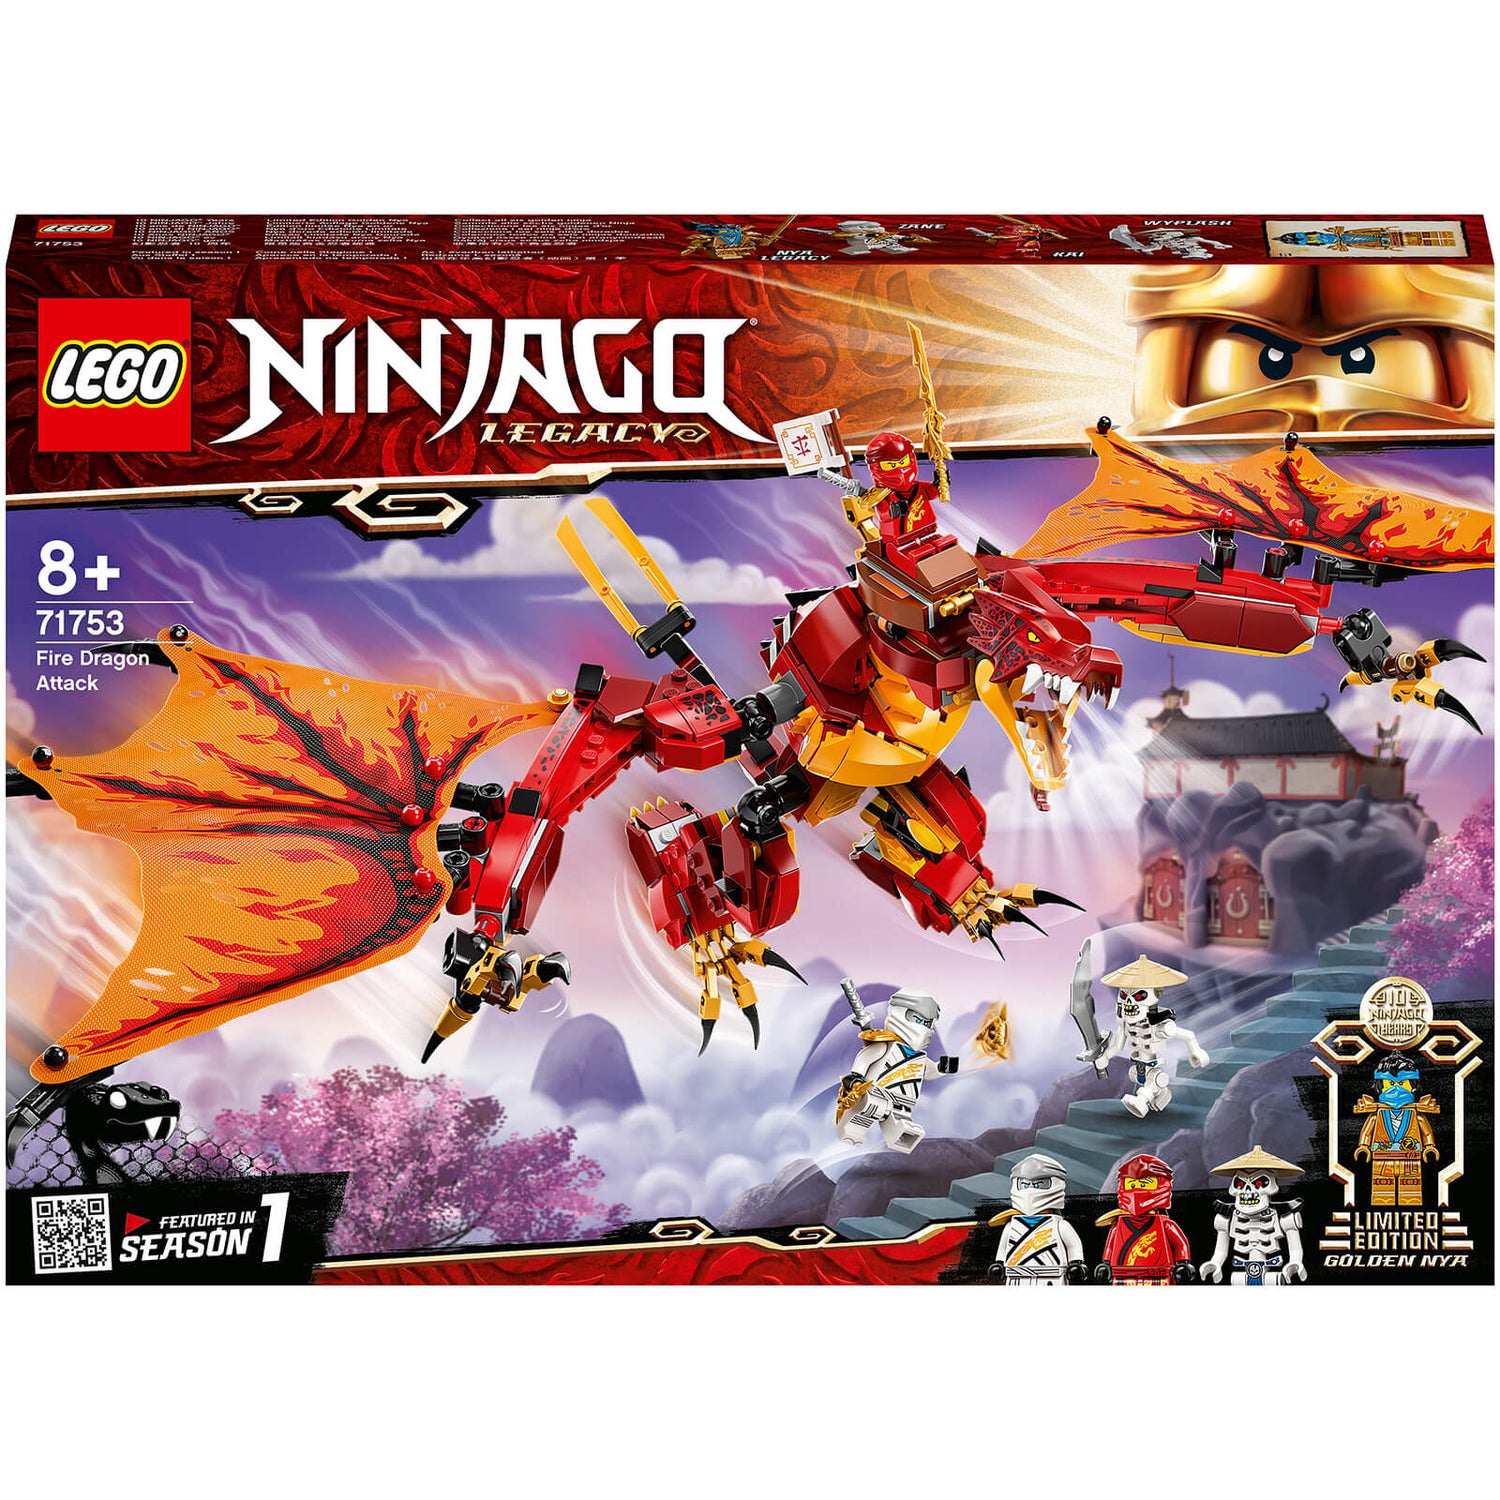 LEGO NINJAGO: Legacy Fire Dragon Attack Ninja Toy Set (71753) Toys - Zavvi  UK